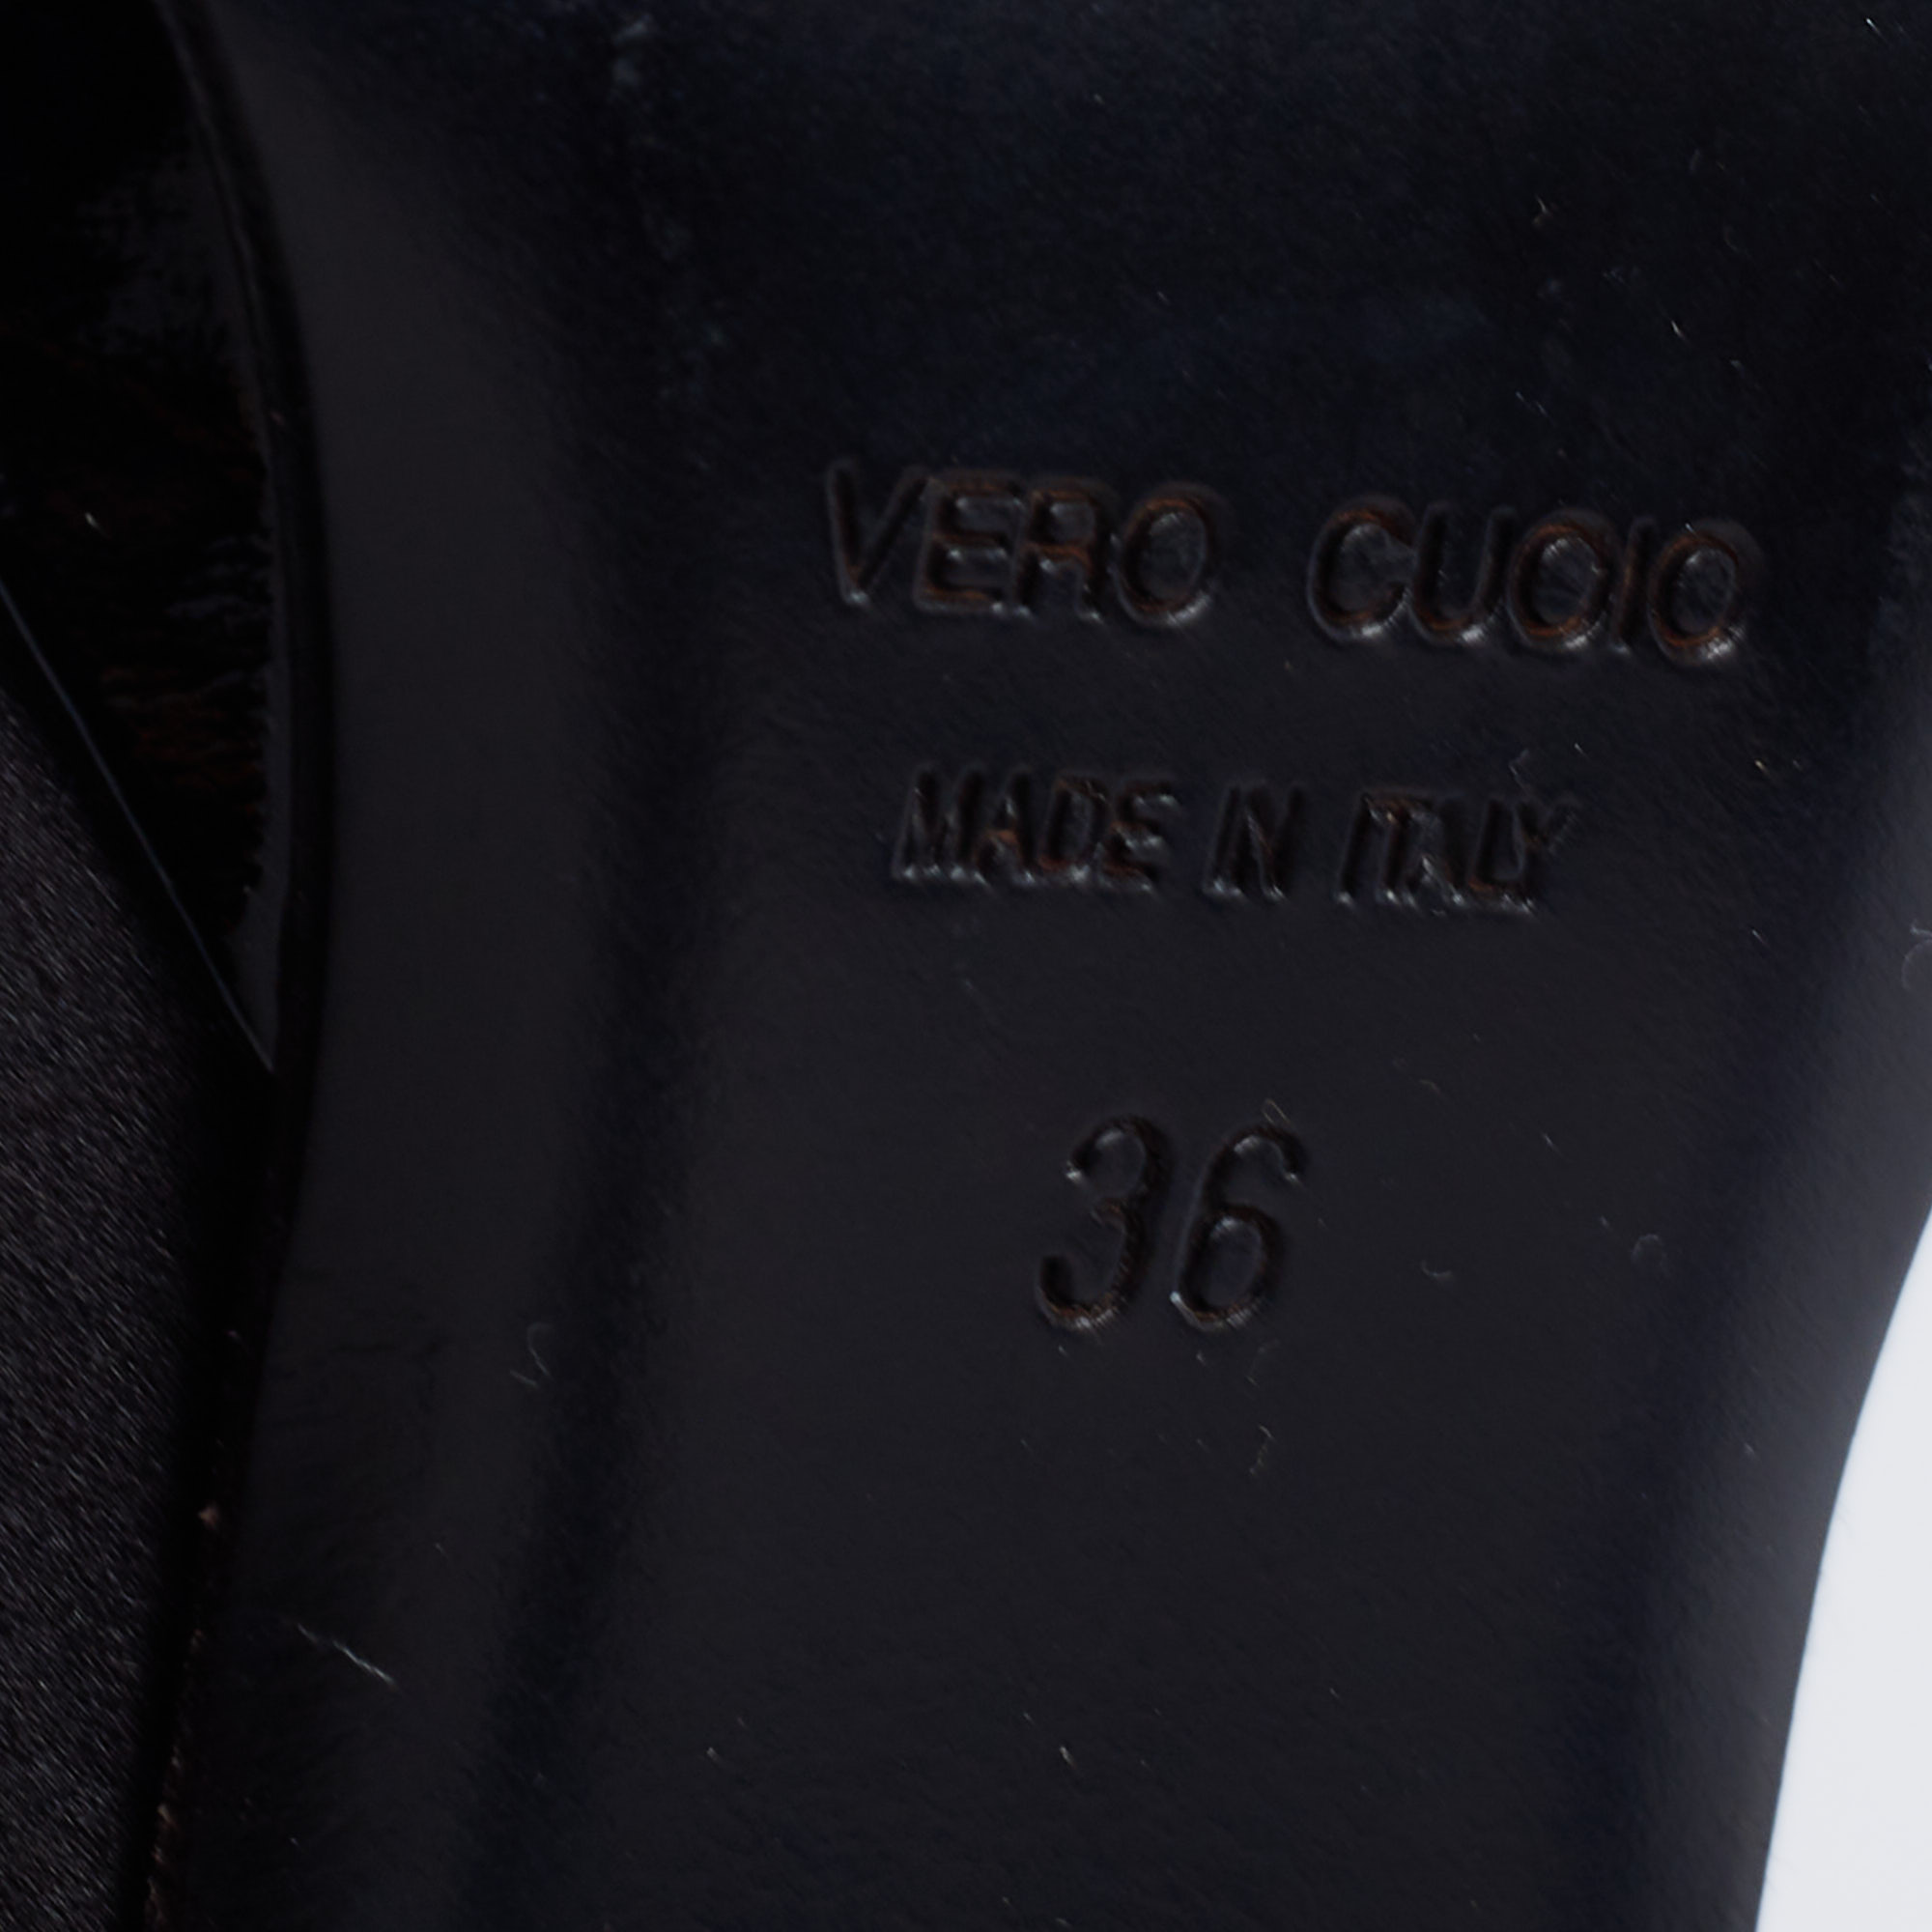 Roberto Cavalli Black Satin Ankle Strap Sandals Size 36